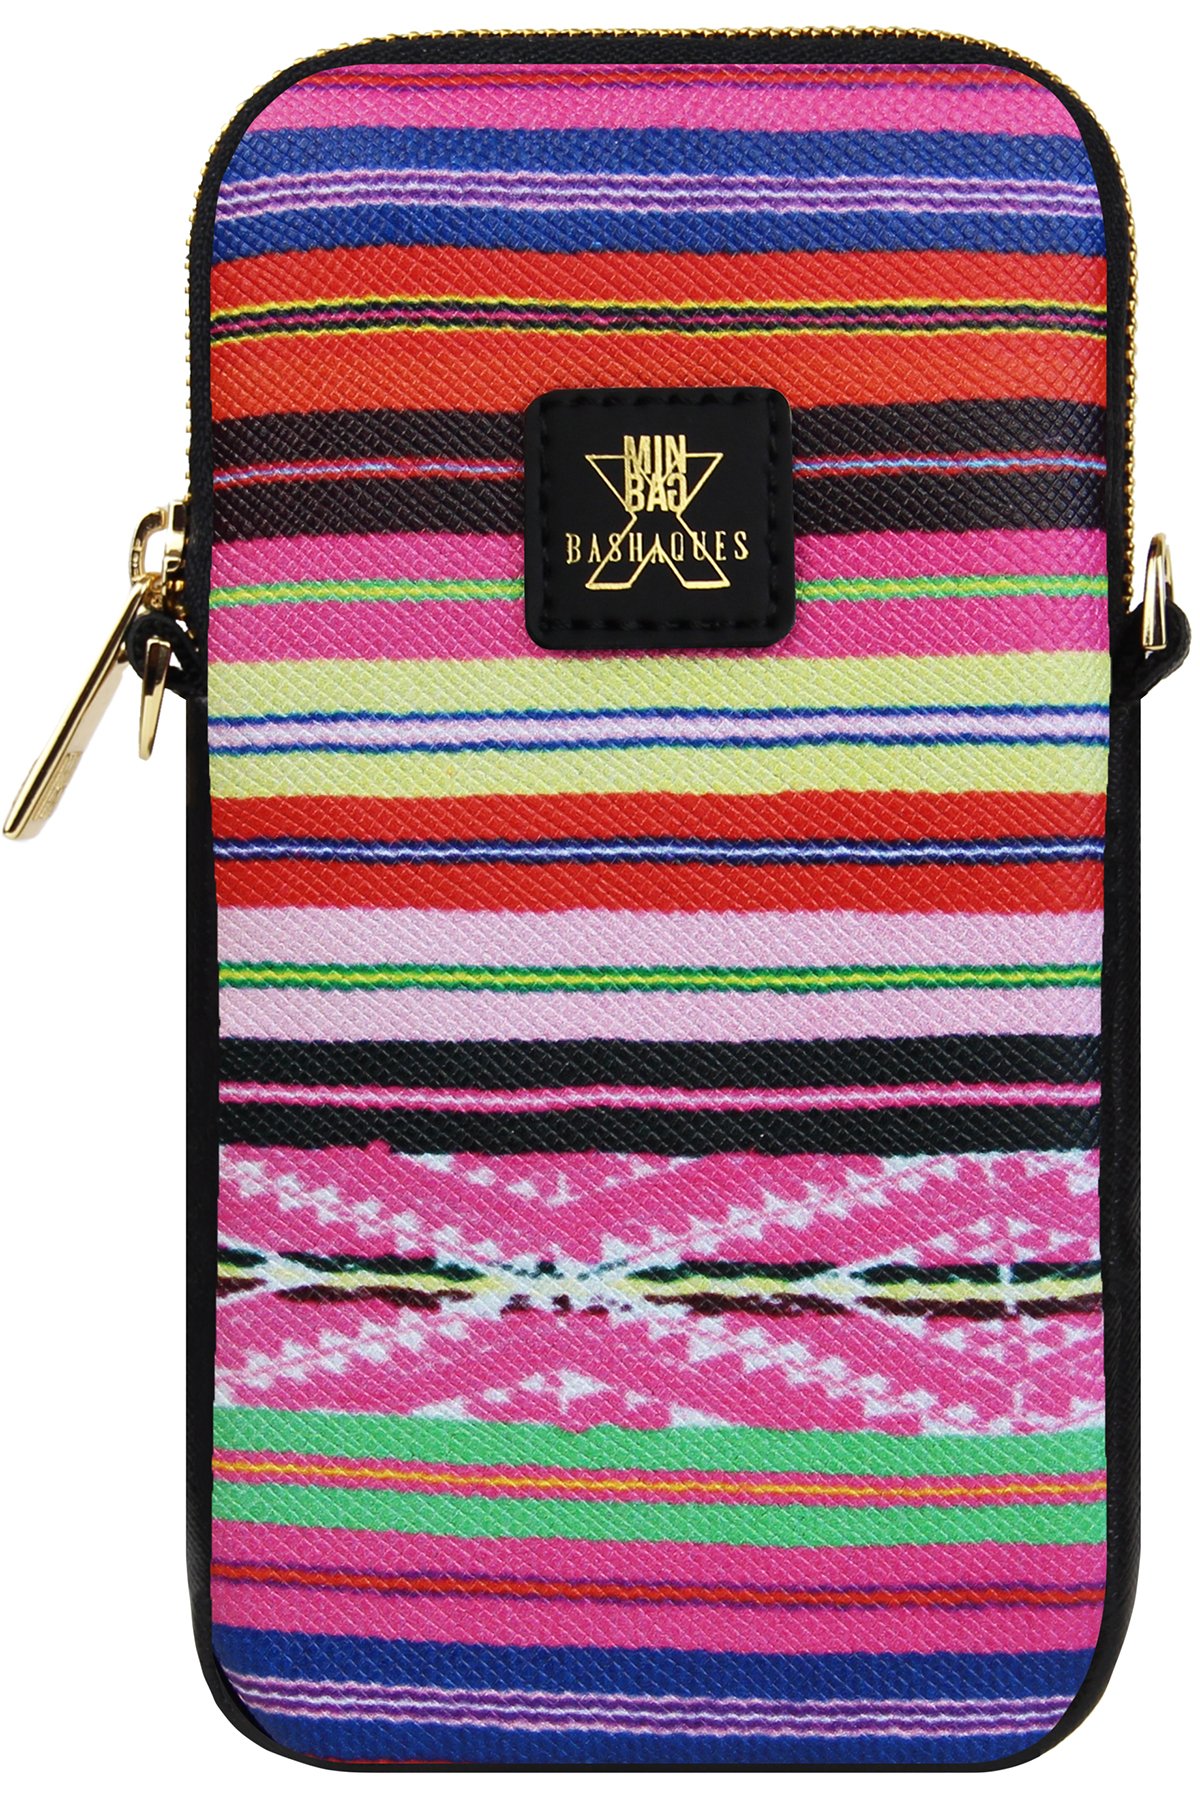 Bashaques x Minbag Phone Bag (Peruvian Poncho)